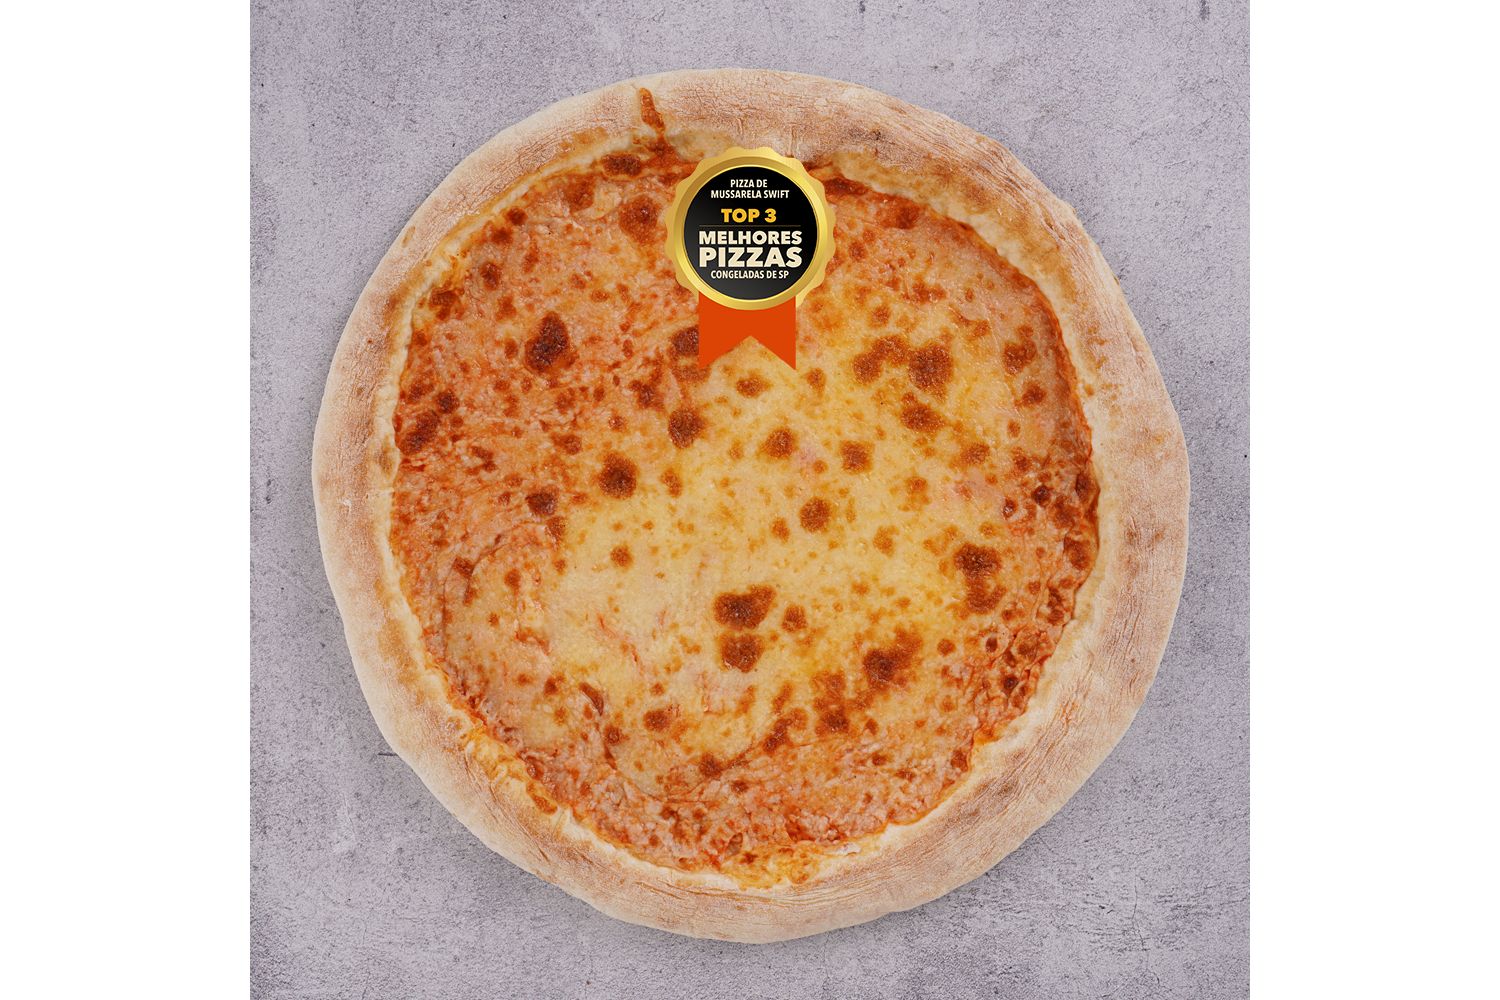 Pizza Artesanal de Mussarela Swift 400g - Loja Online Swift - Swift